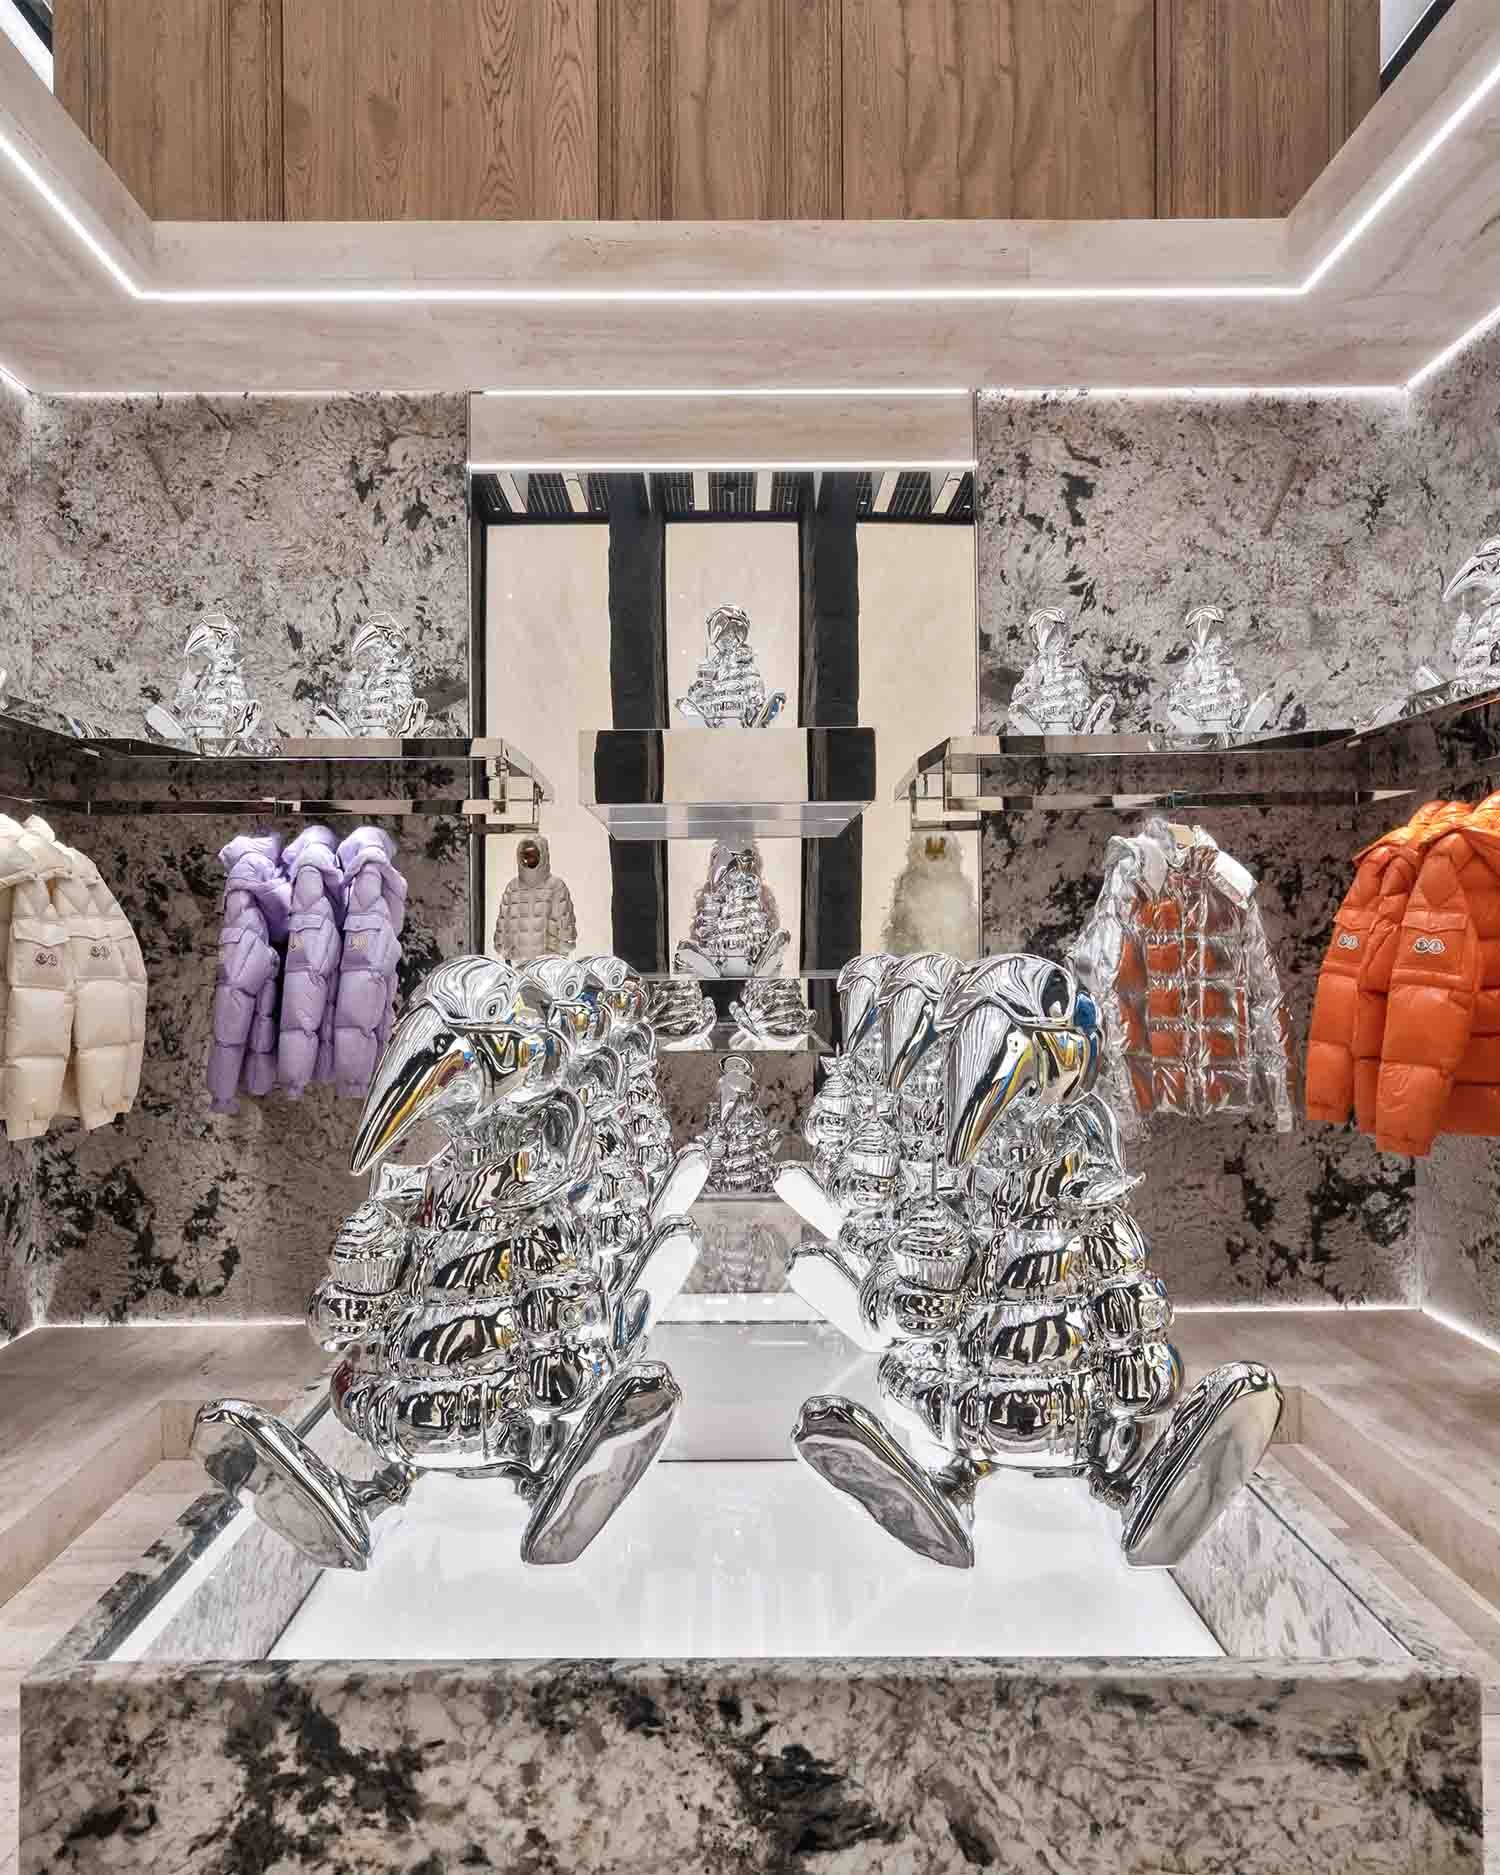 Louis Vuitton Opens a Miami Store